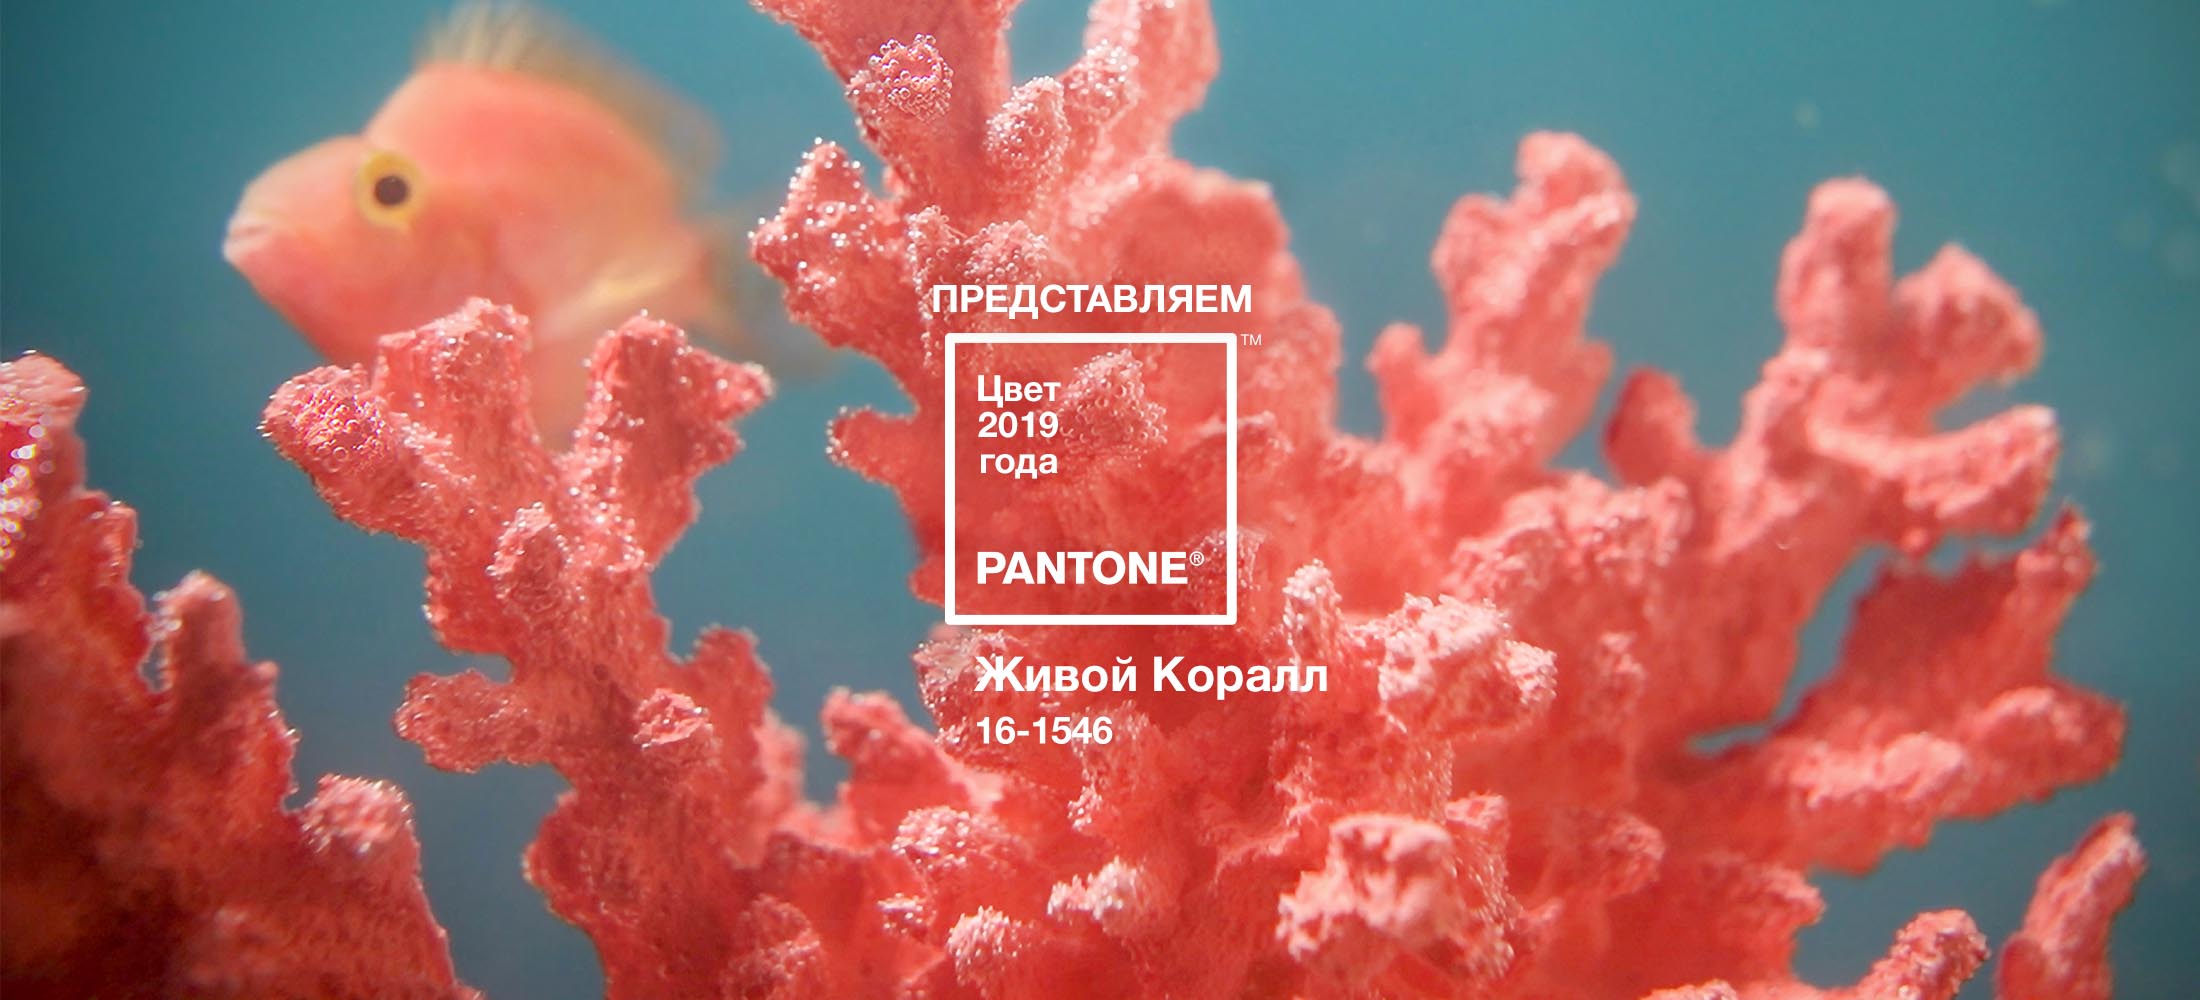 PANTONE - Живой коралл (Living Coral)